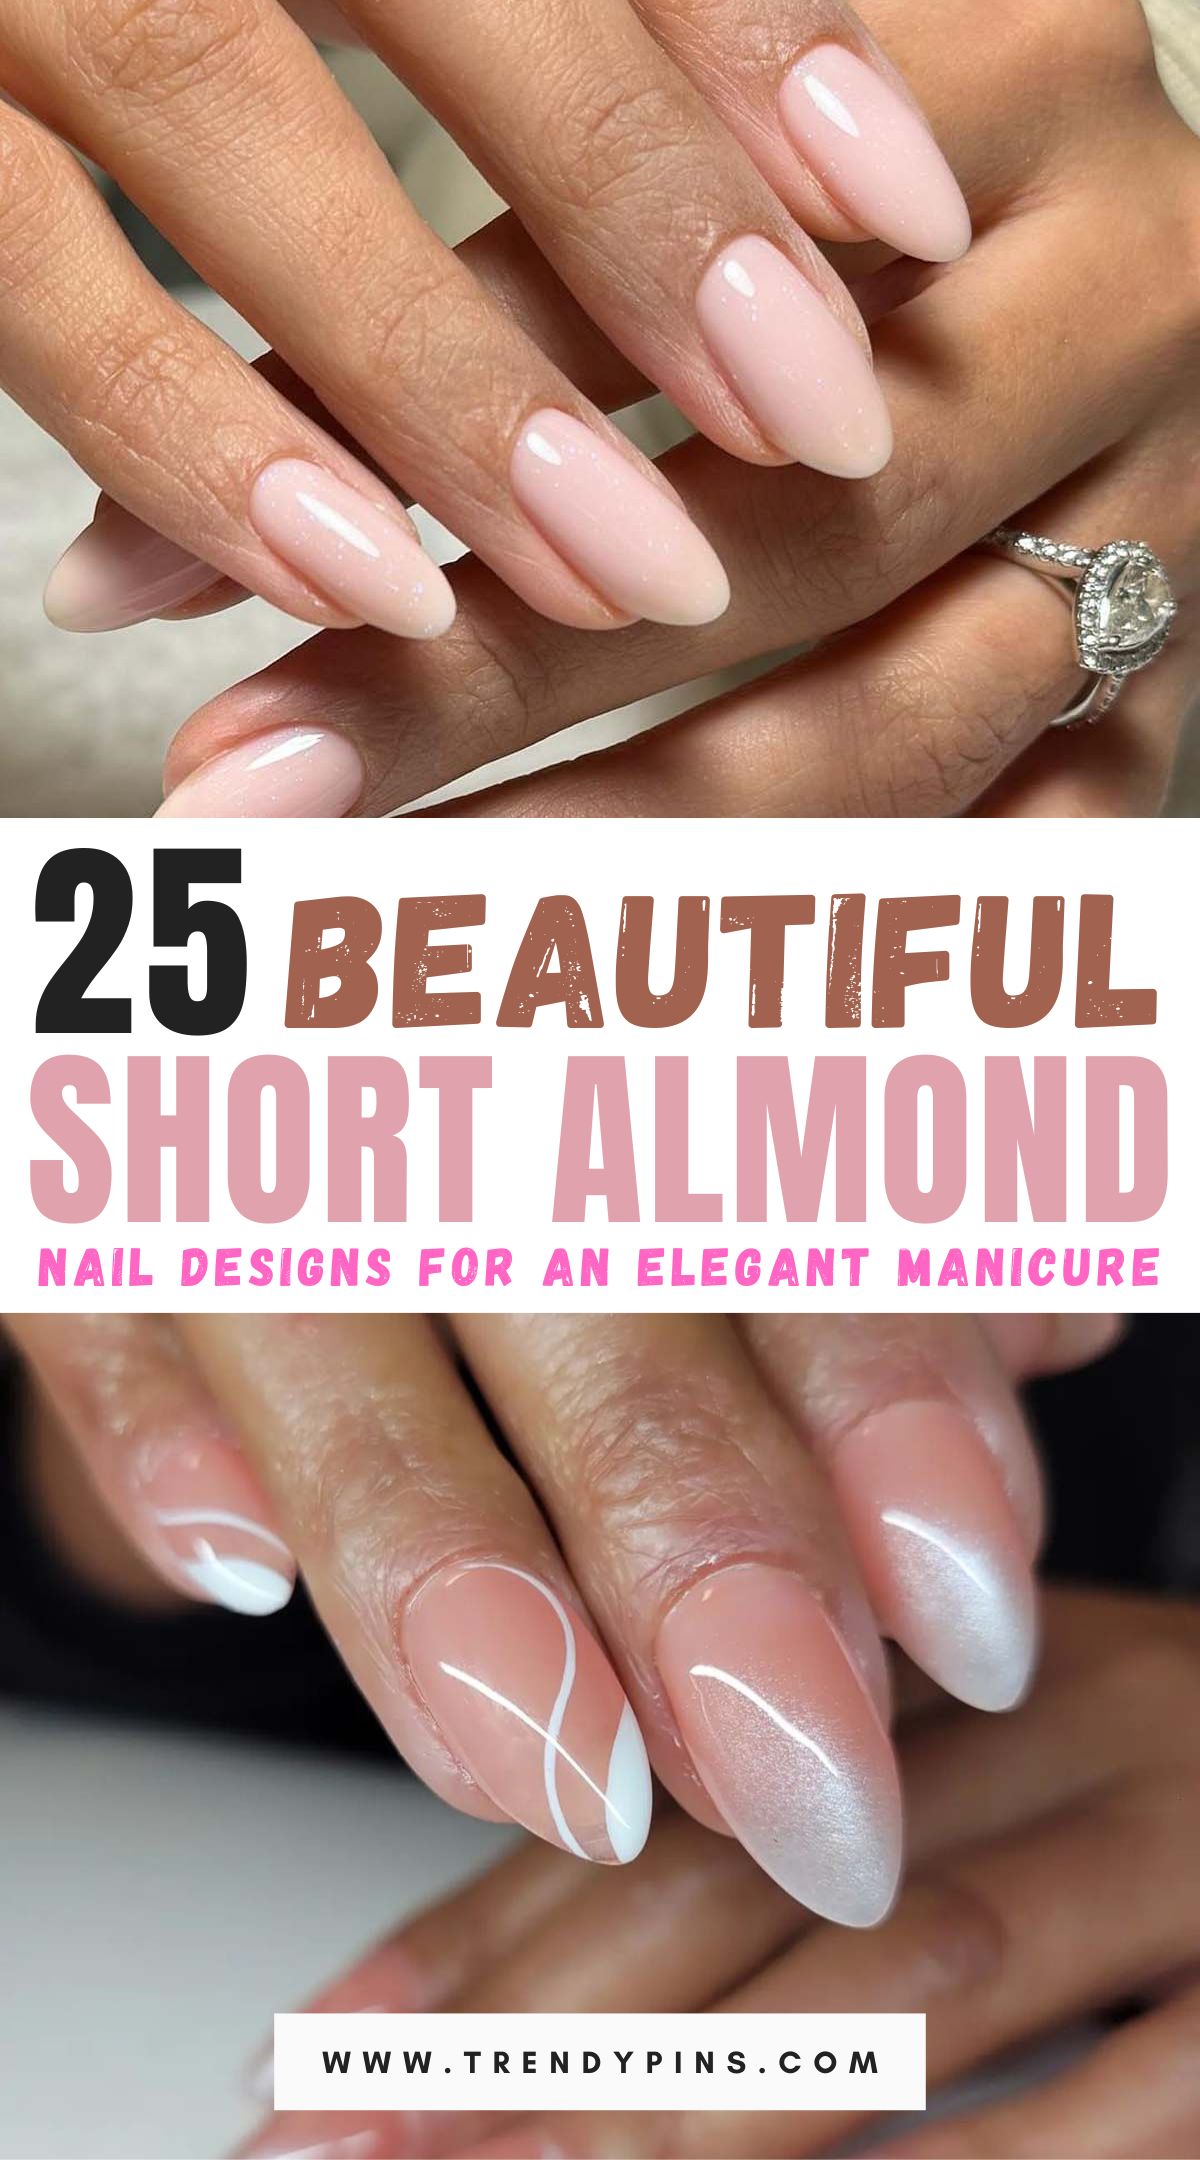 Best Short Almond Nail Designs